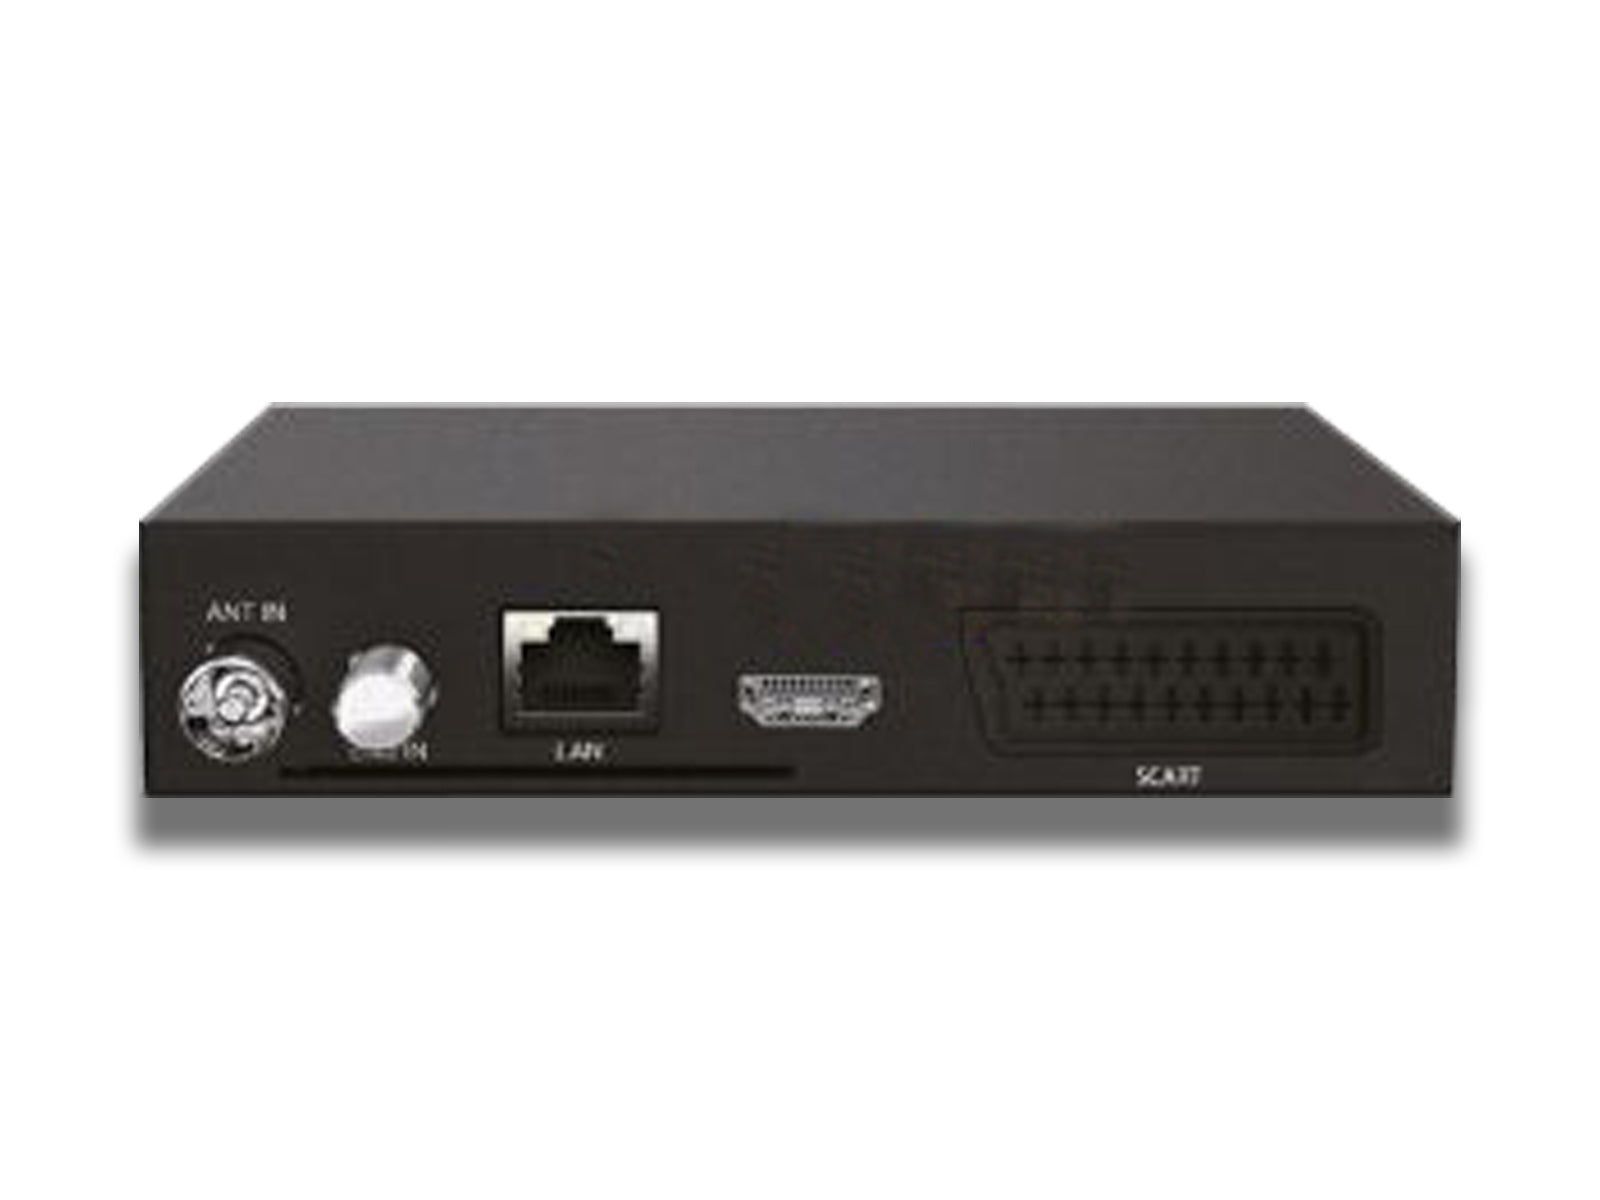 EDISION Kabel Receiver PICCO T265 terrestrischer Receiver, DVB-T /2  ,H.265/HEVC (HDTV, PVR-Funktion=optional, DVB-T, schwarz)